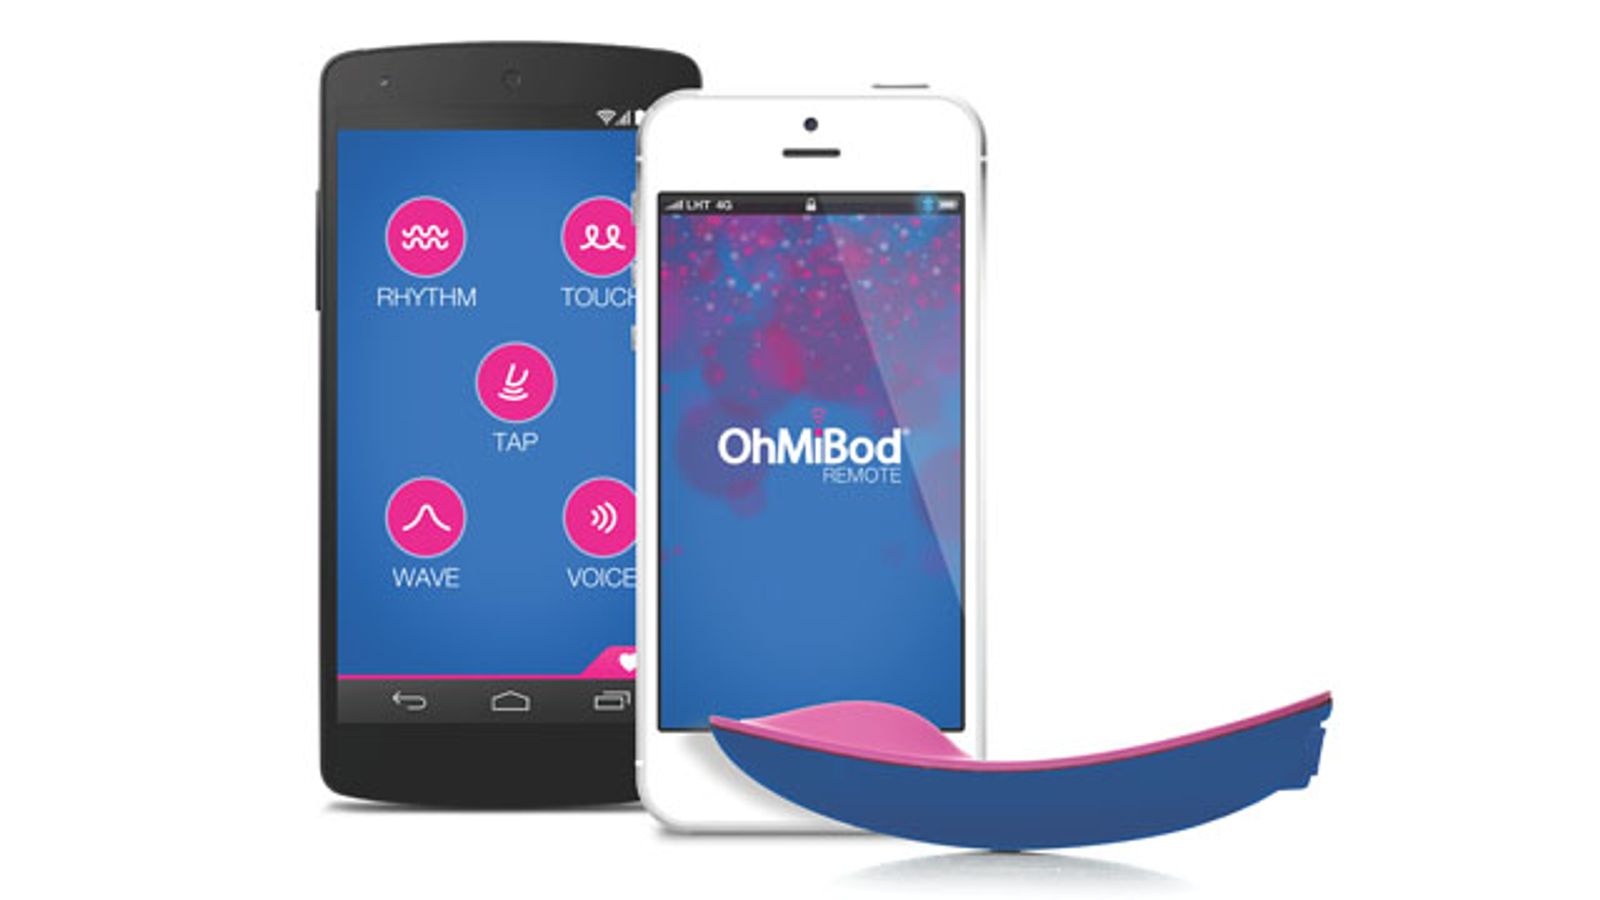 OhMiBod Promo Video Goes Triple Platinum on YouTube